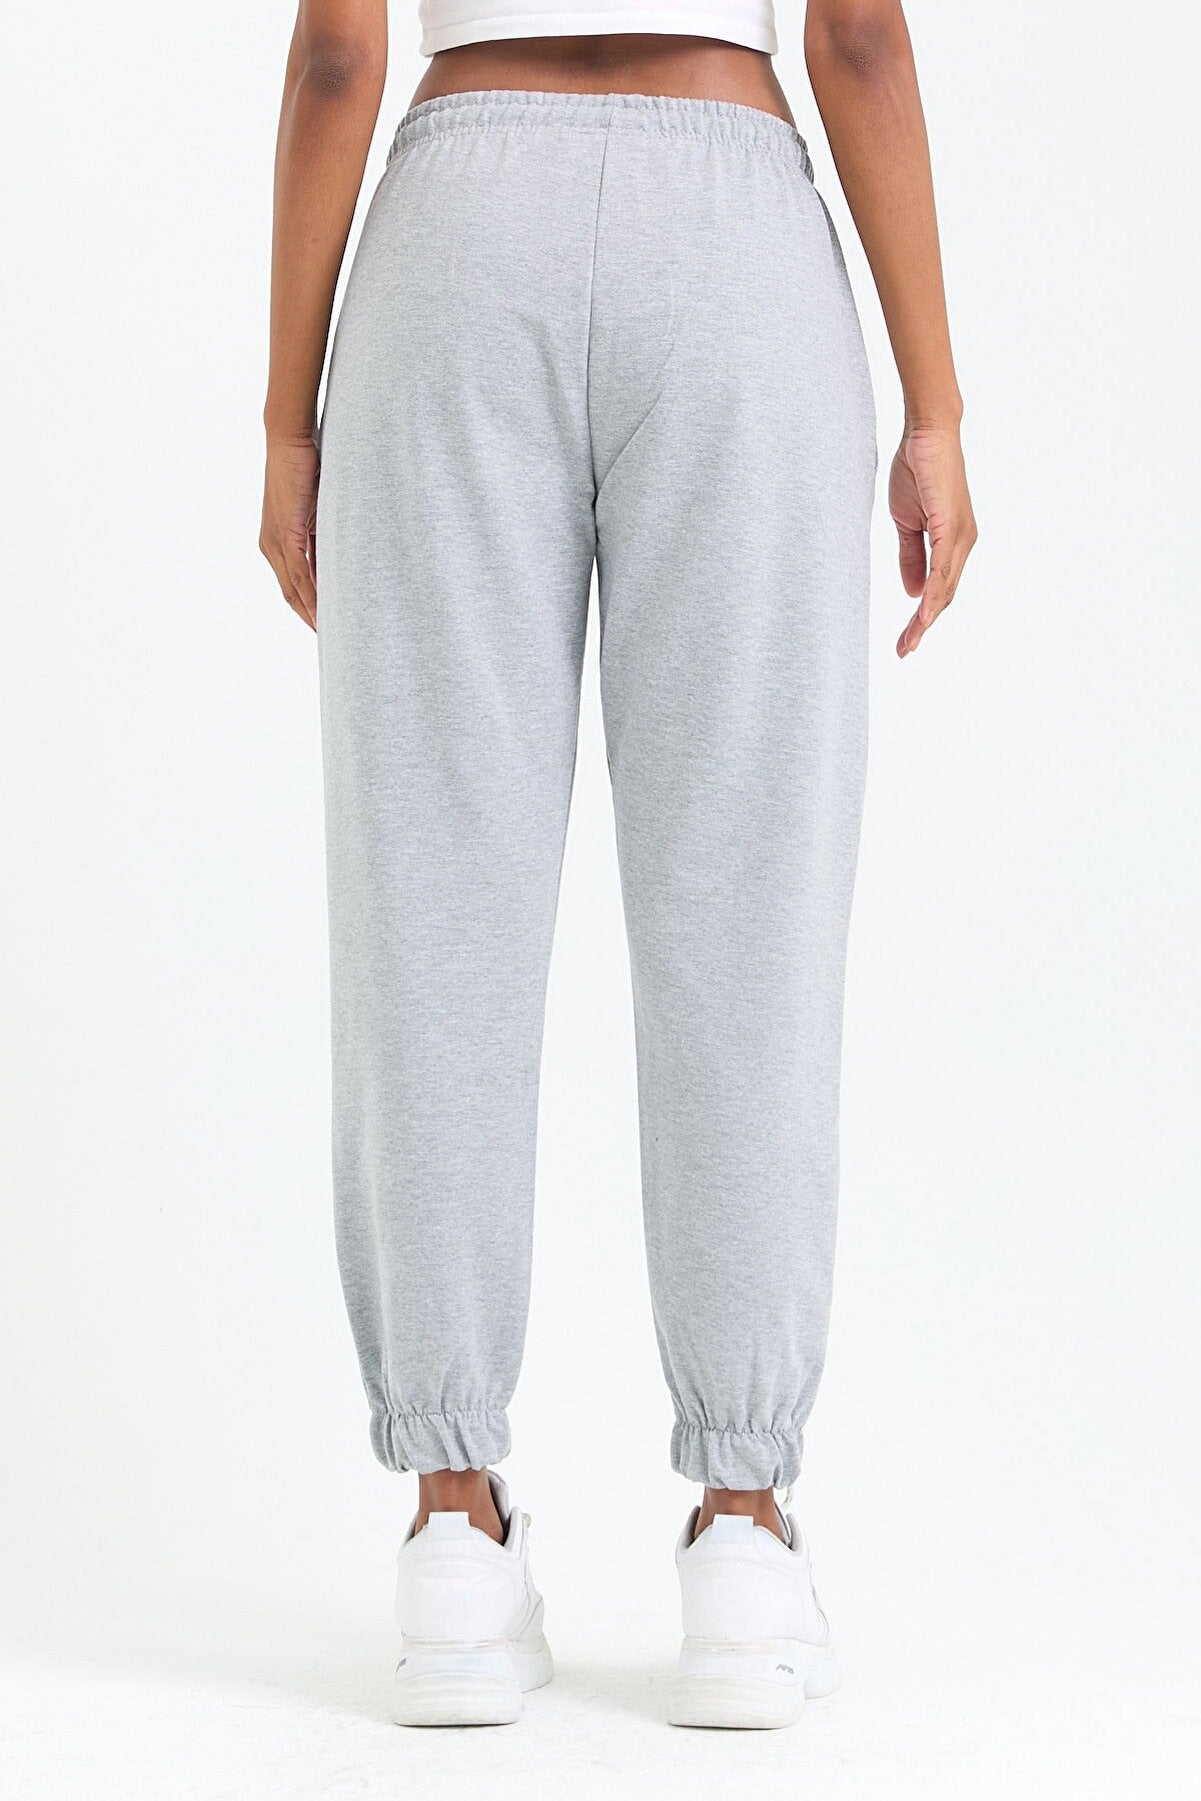 Wholesale Women's Cotton Stylish Sweatpants Jogger With Pockets